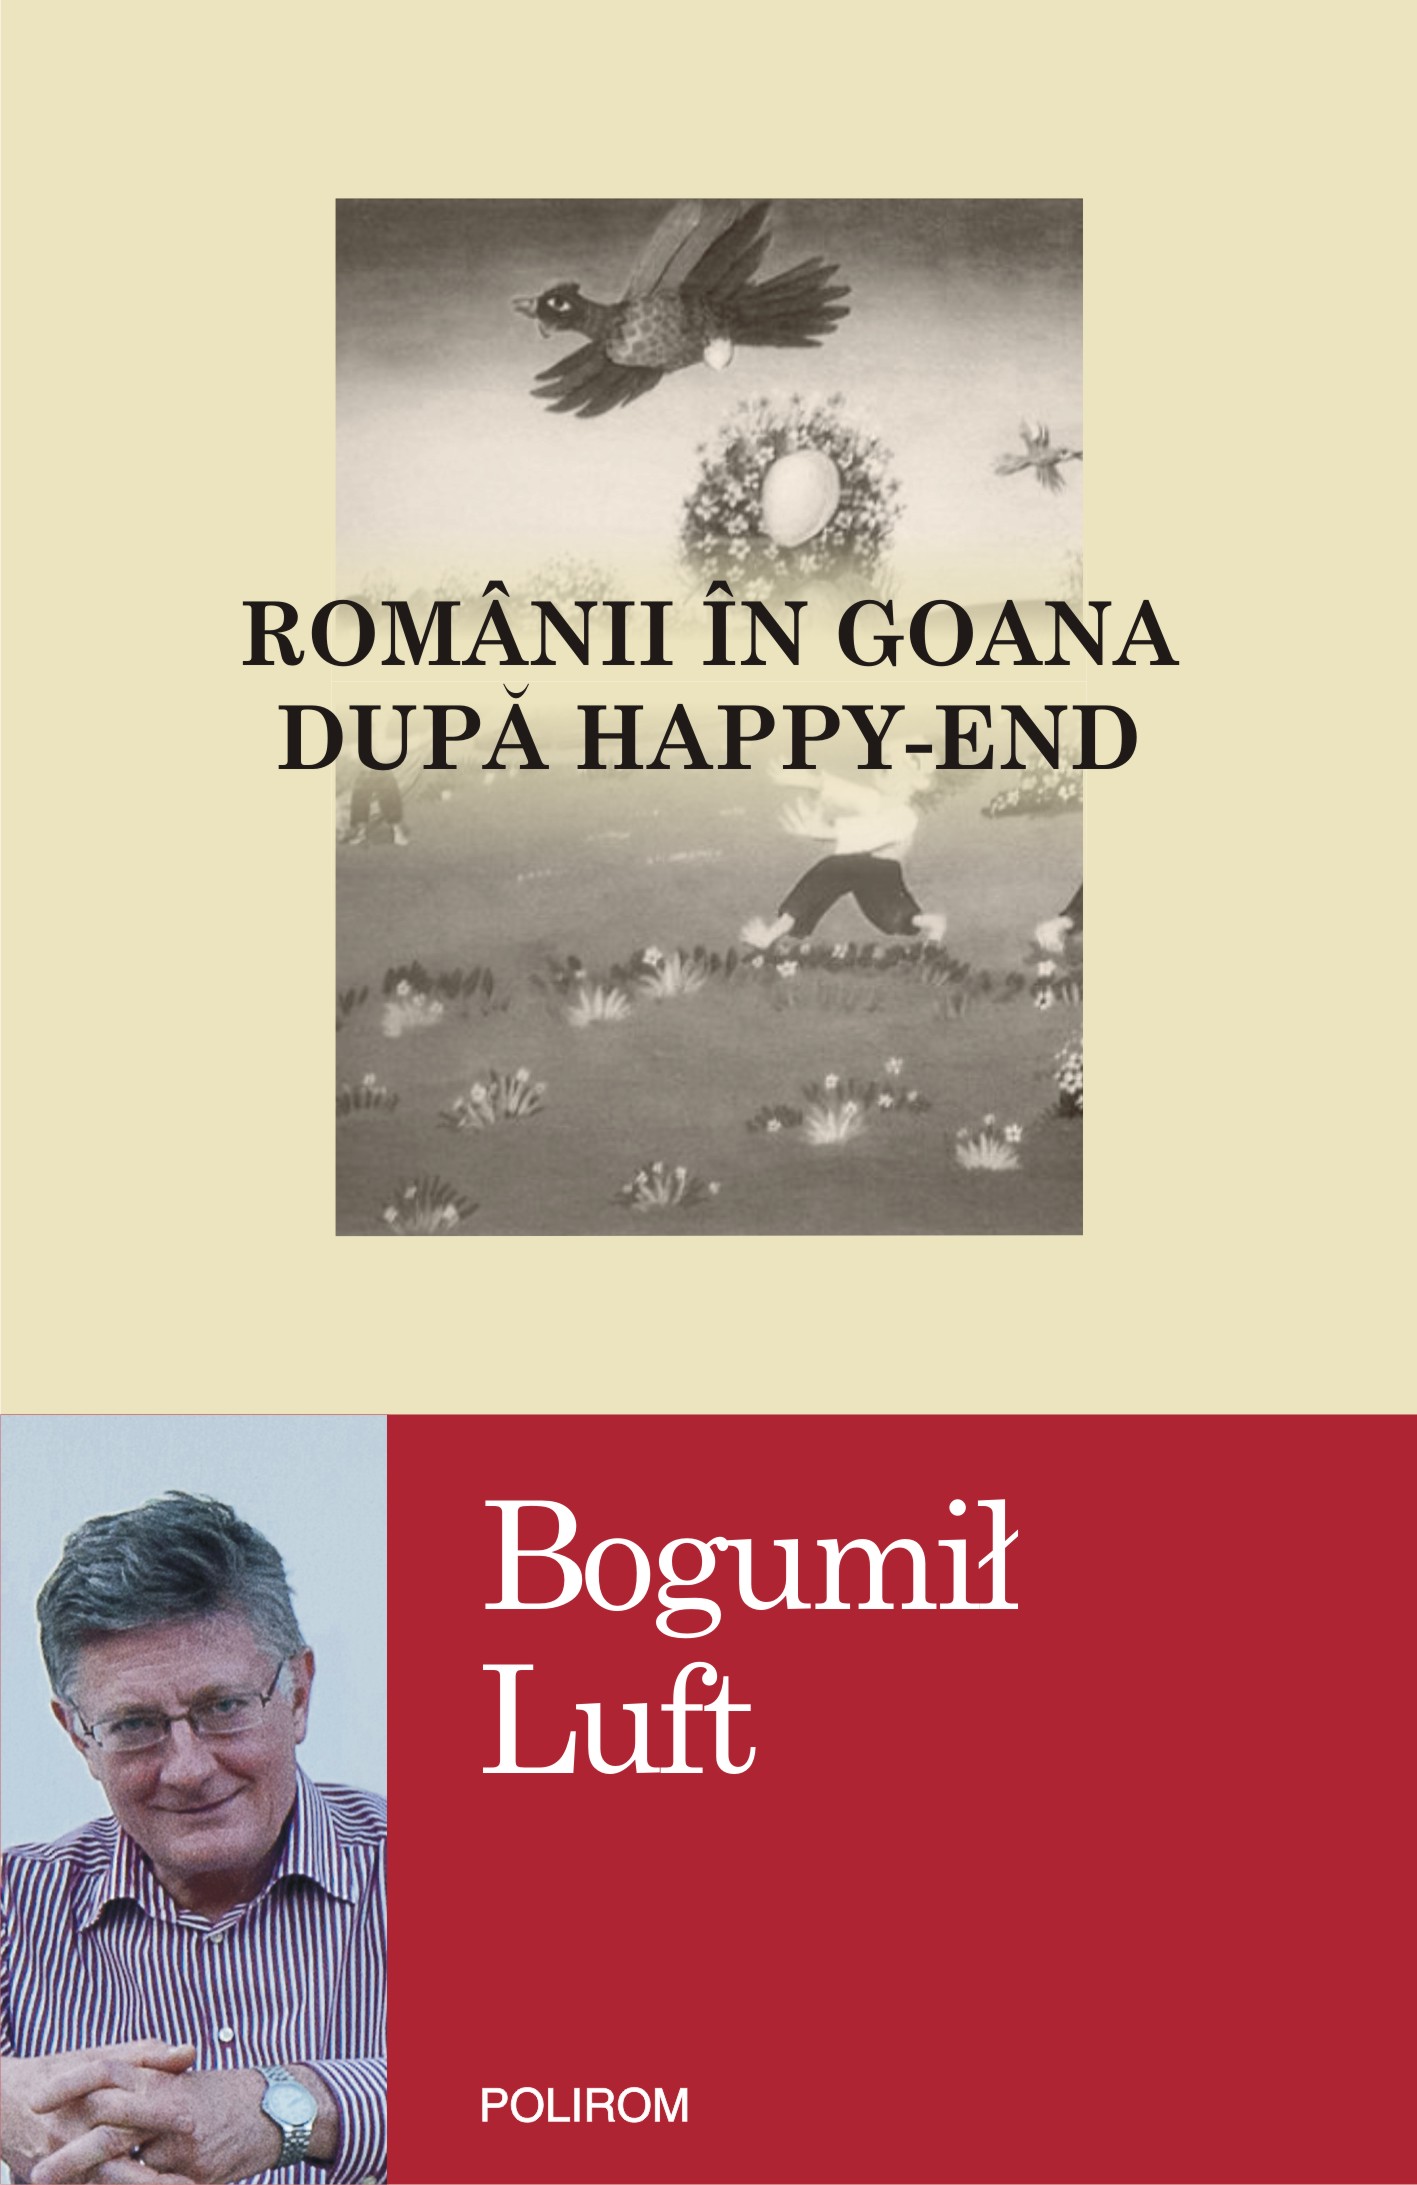 eBook Romanii in goana dupa happy-end - Bogumil Luft